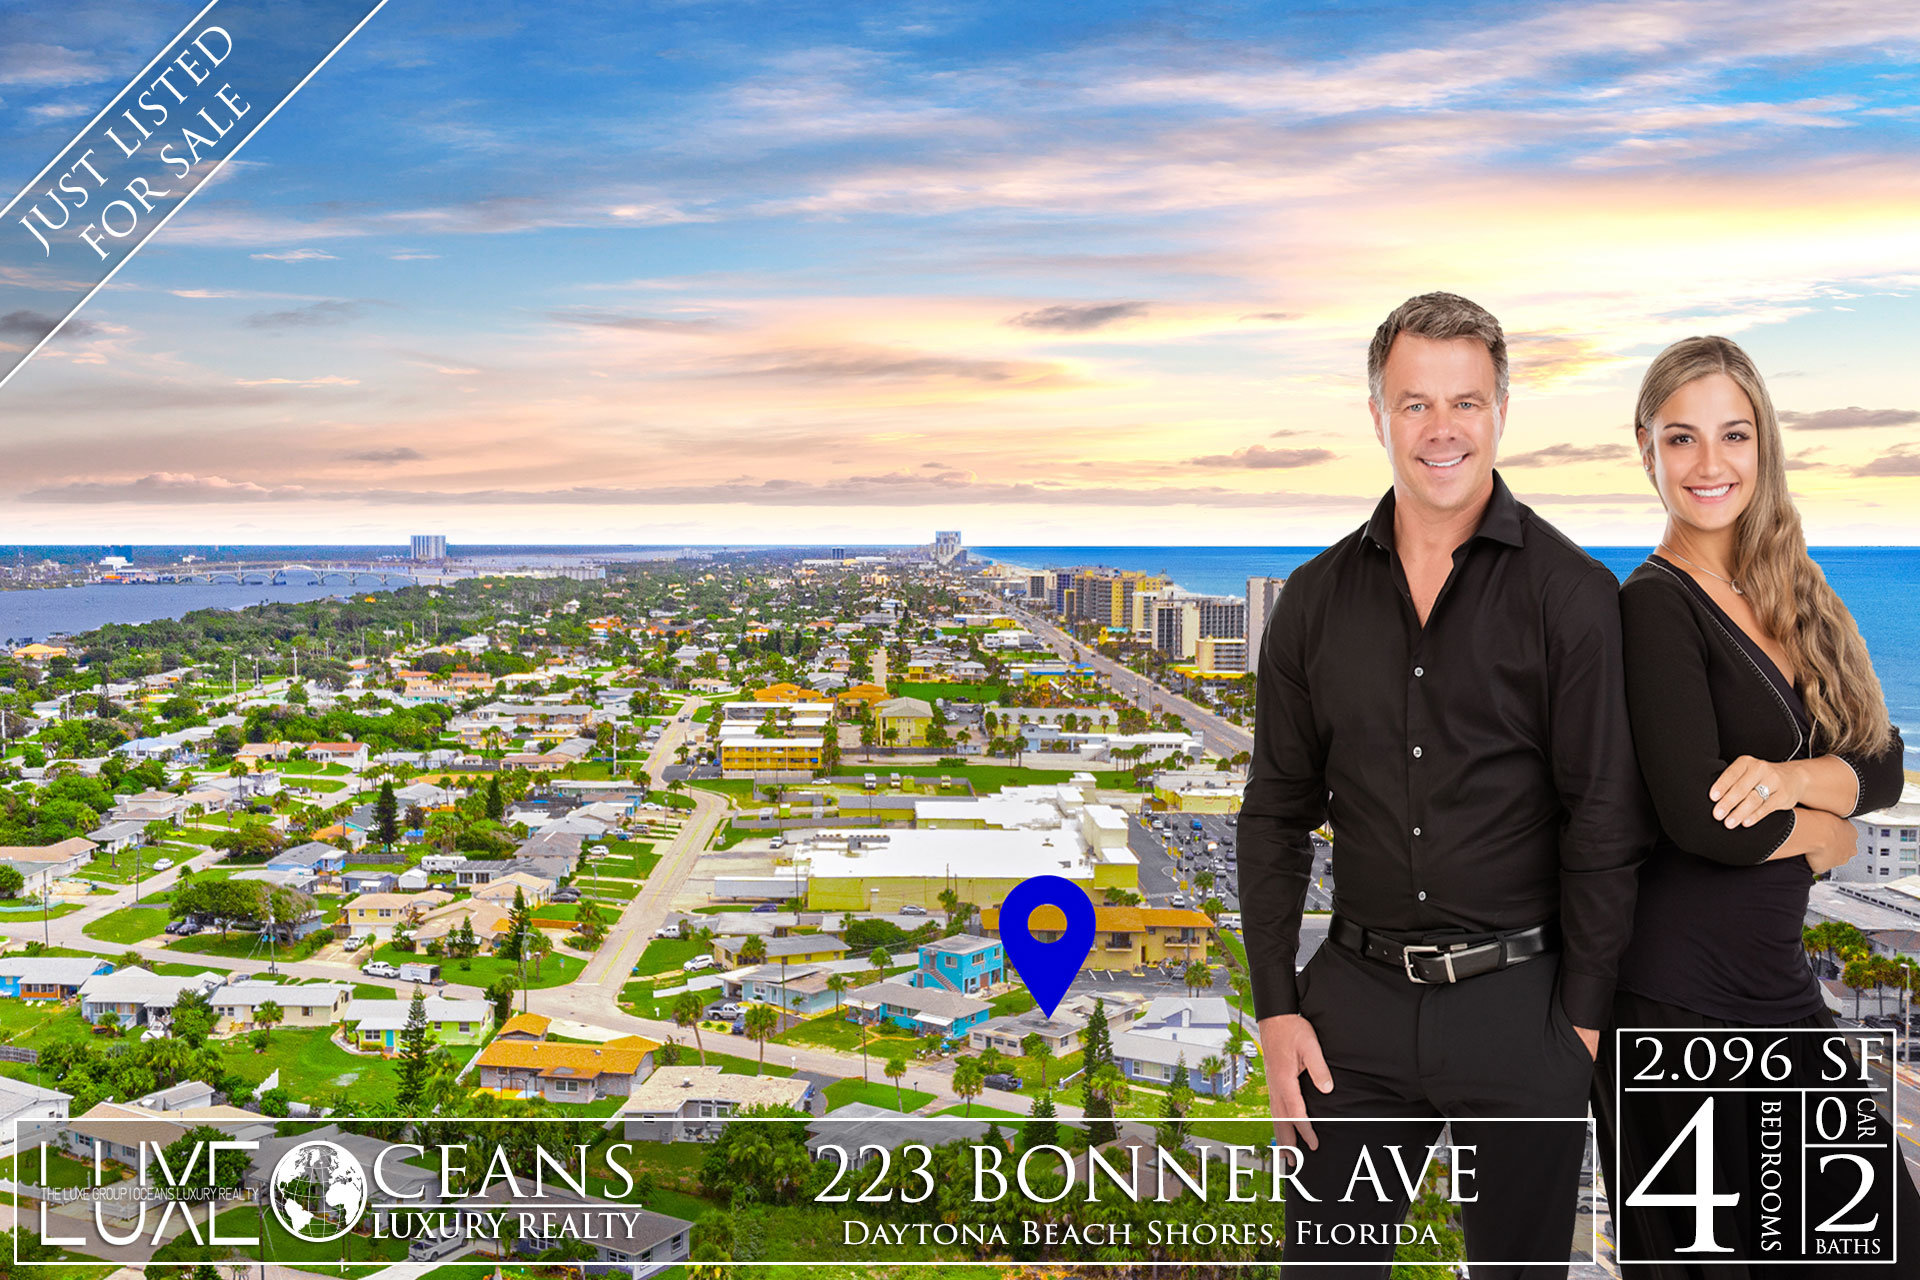 Daytona Beach Shores Homes For Sale.  223 Bonner Ave Daytona Beach Shores, FL 